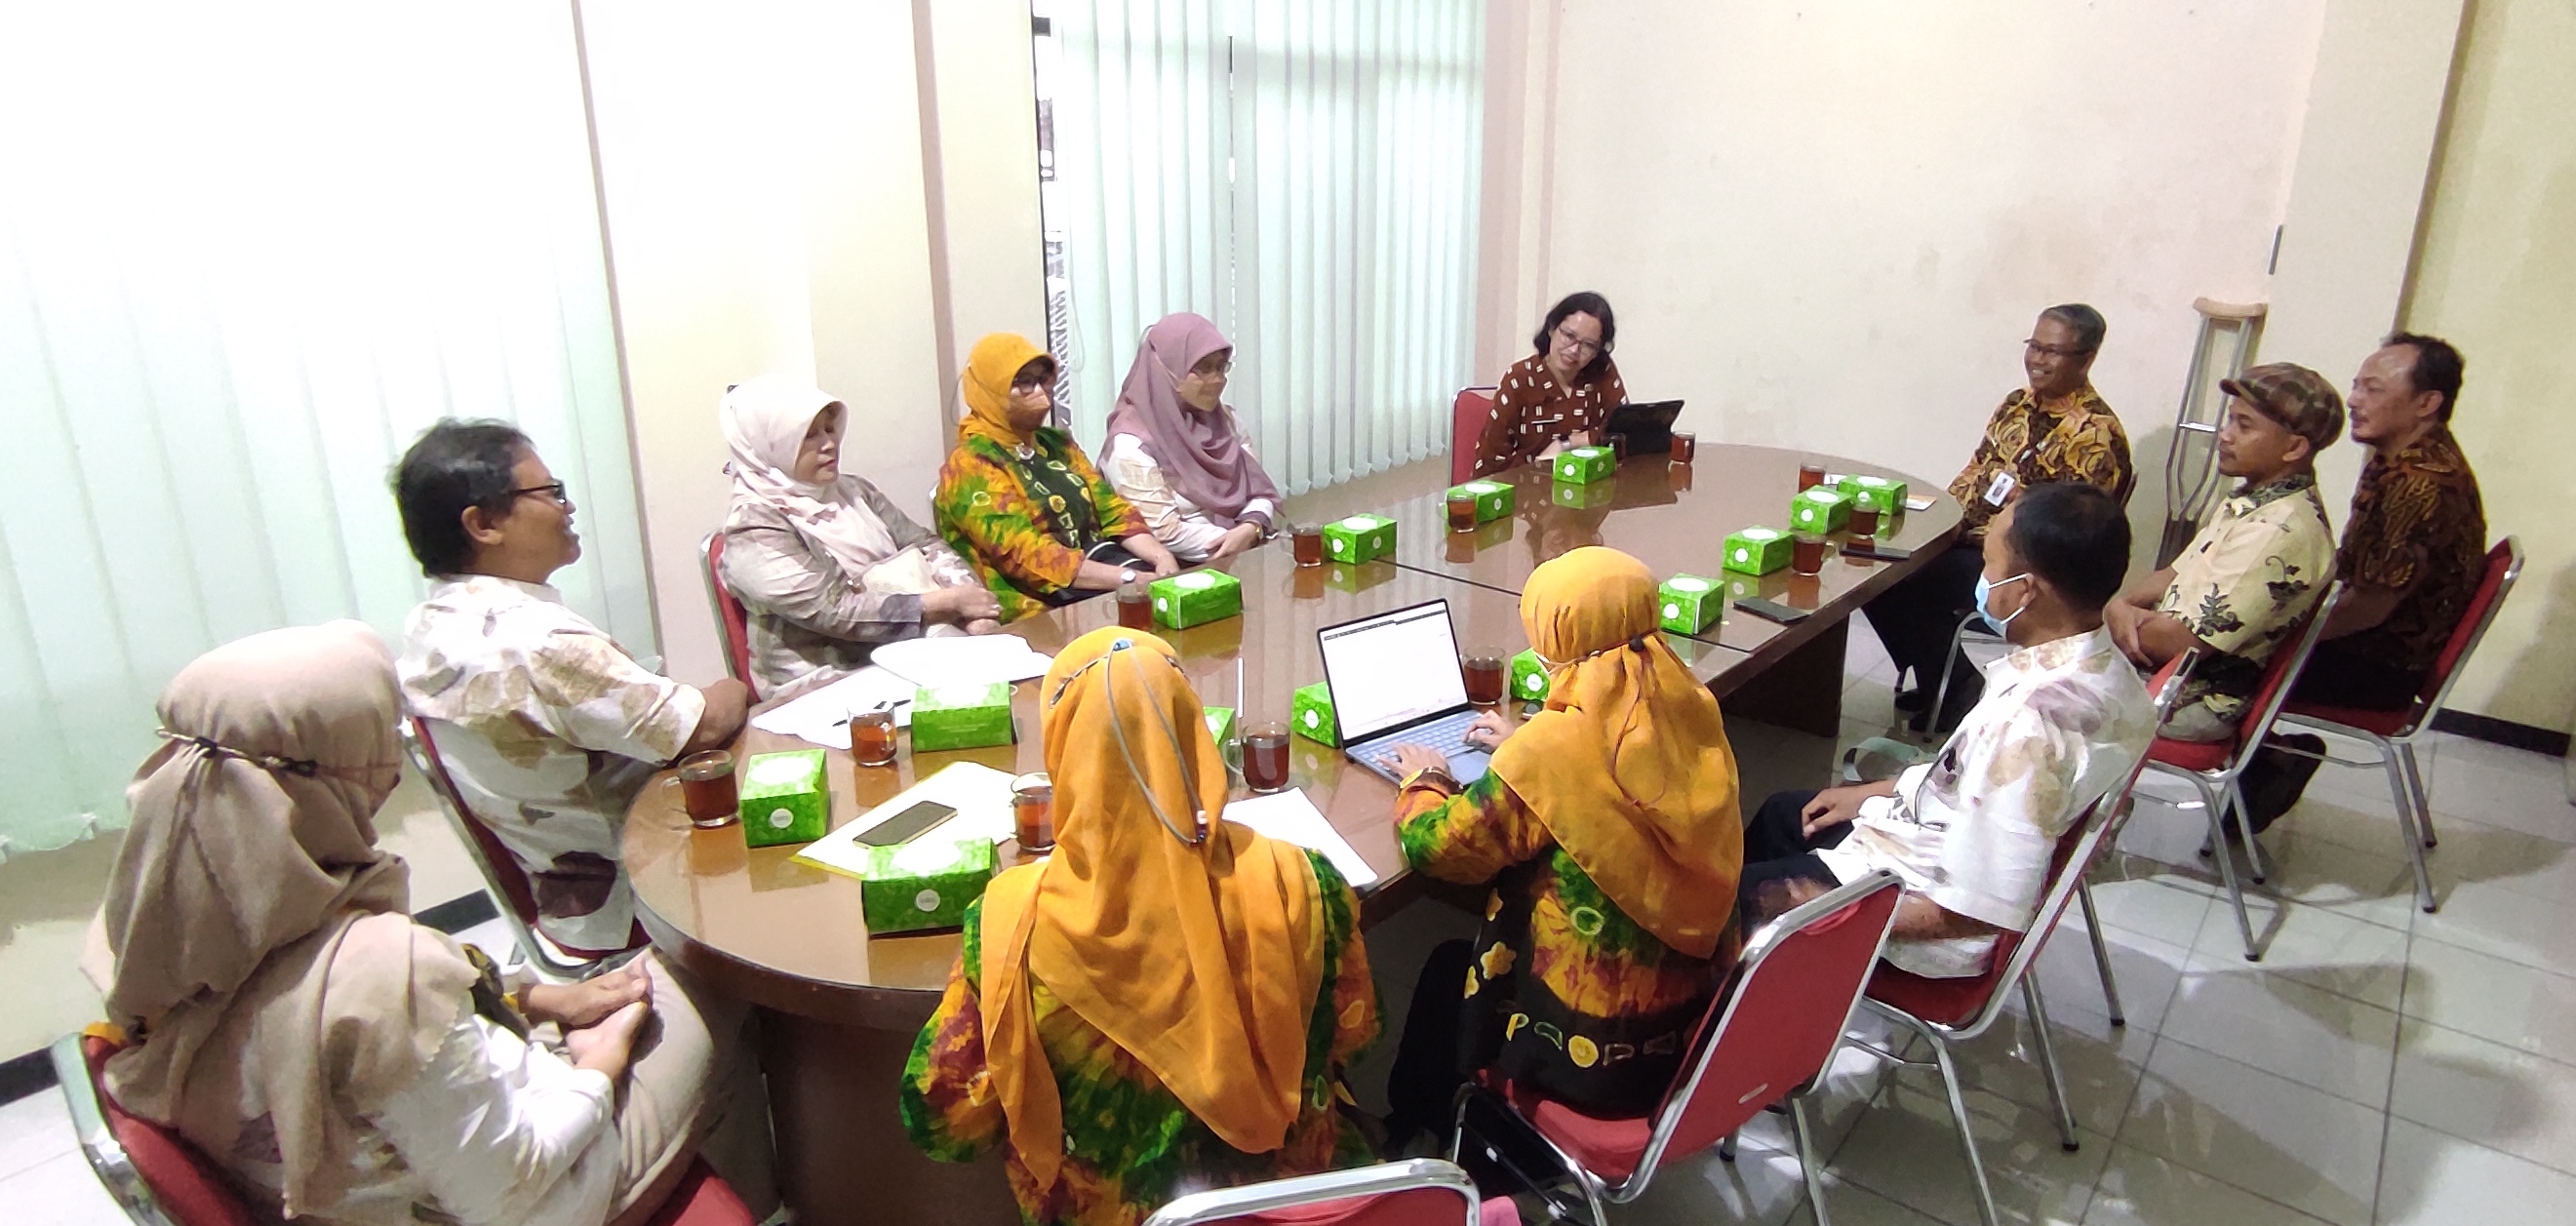 Kunjungi ULD Wonosobo, ULD Yogyakarta Puji Realisasi Pendidikan Inklusi